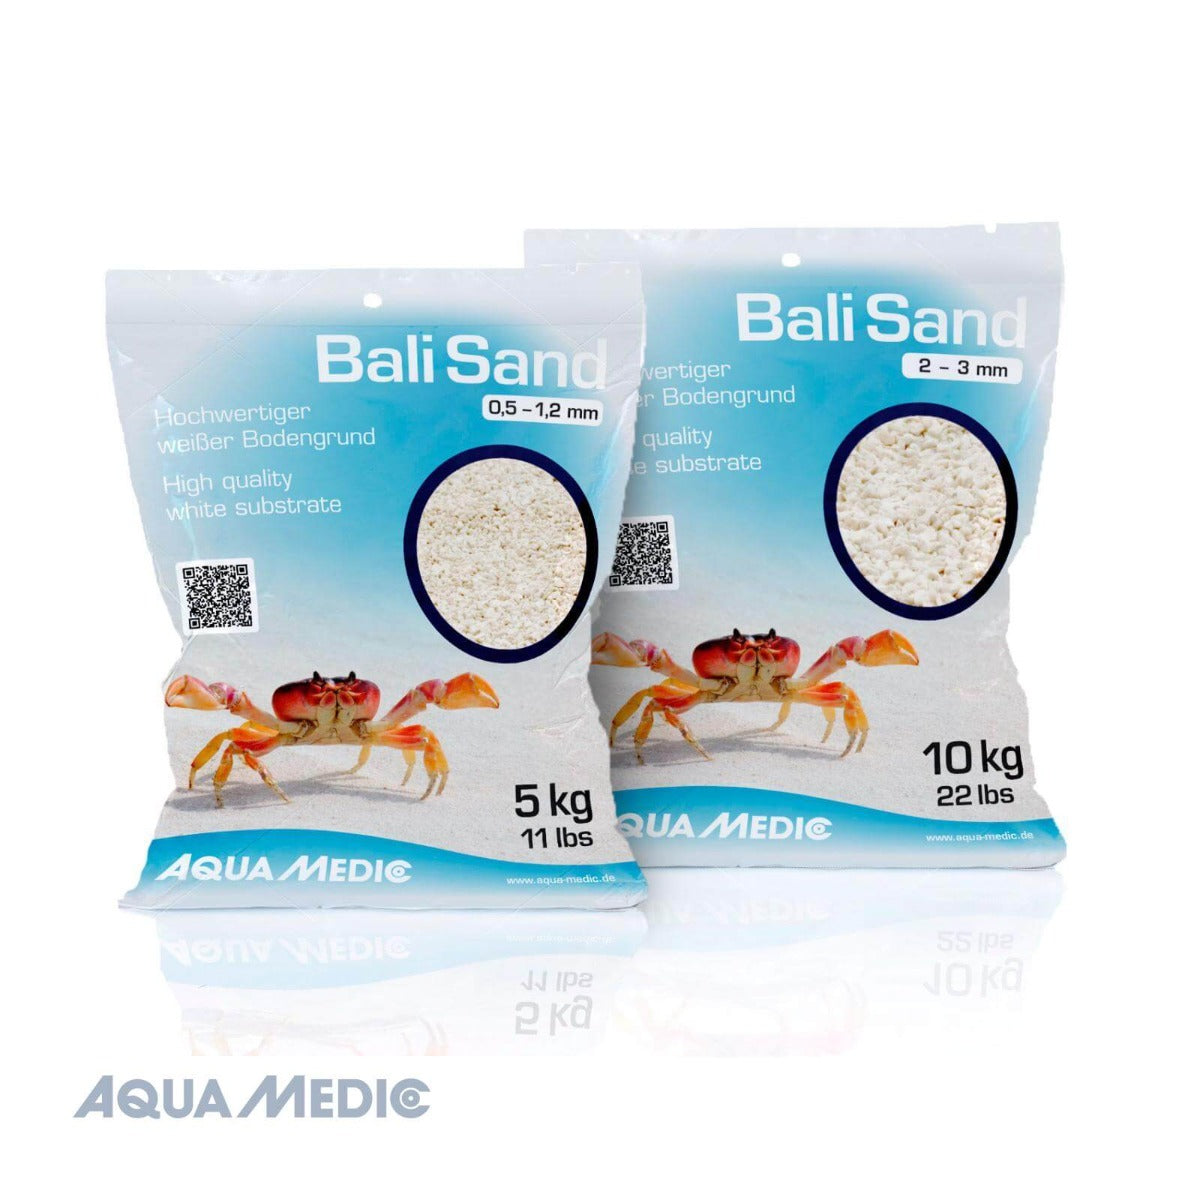 Aqua Medic Bali Sand 2 – 3 mm